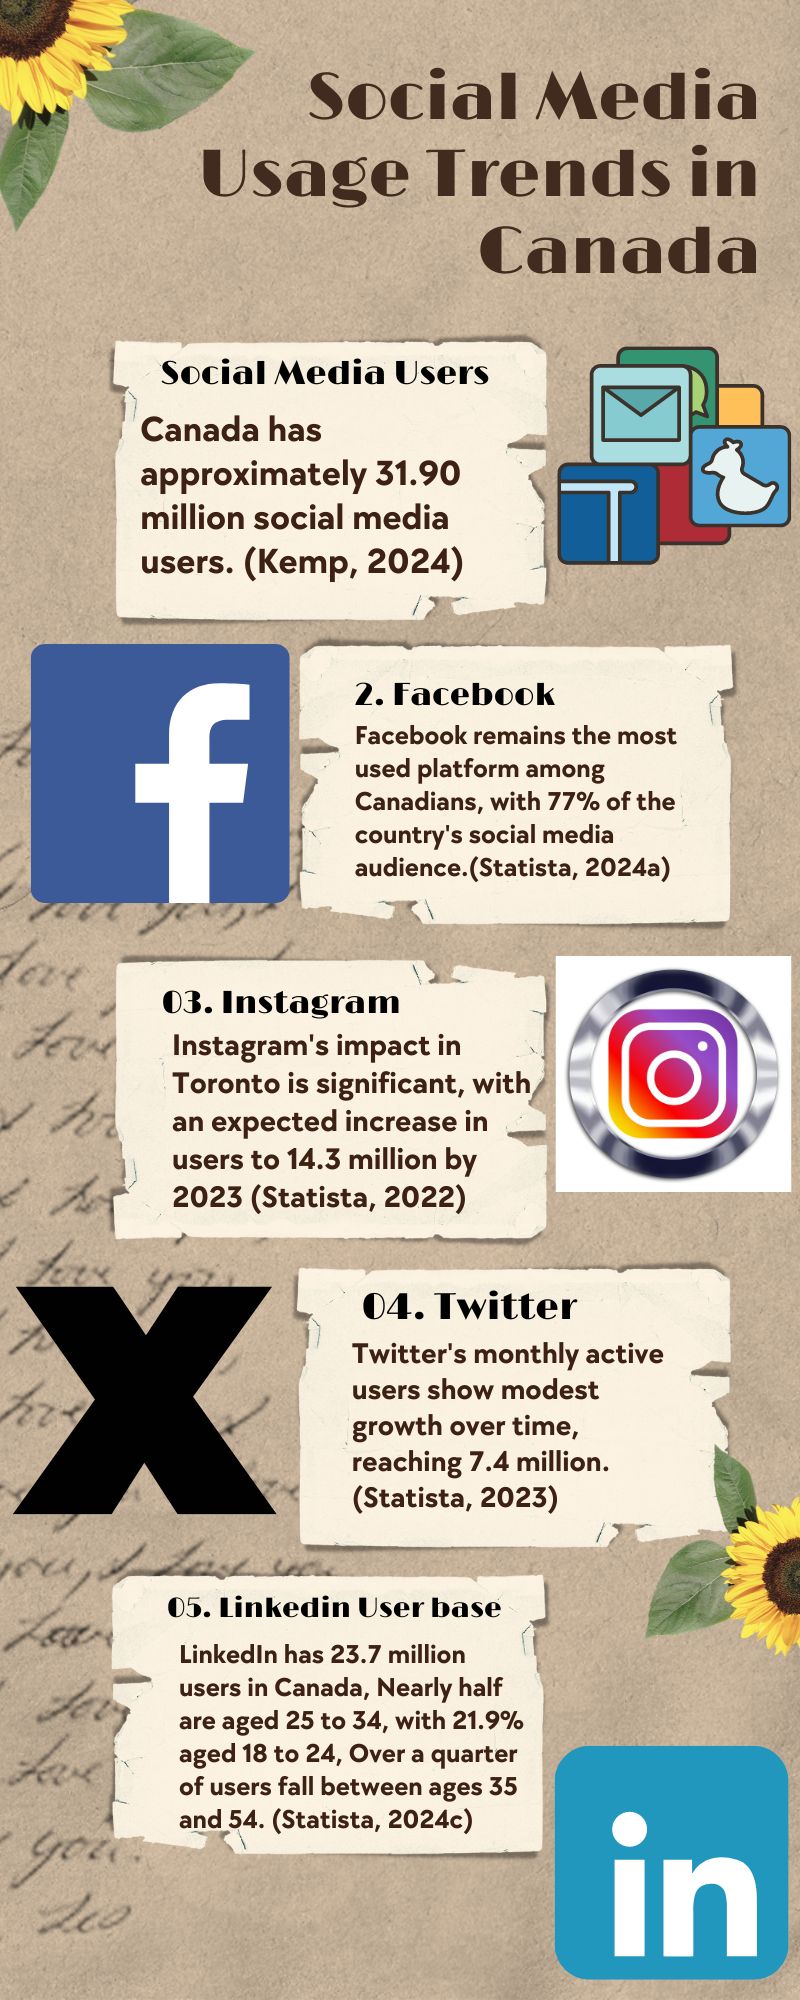 Social media usage trends in Canada info by omygro.